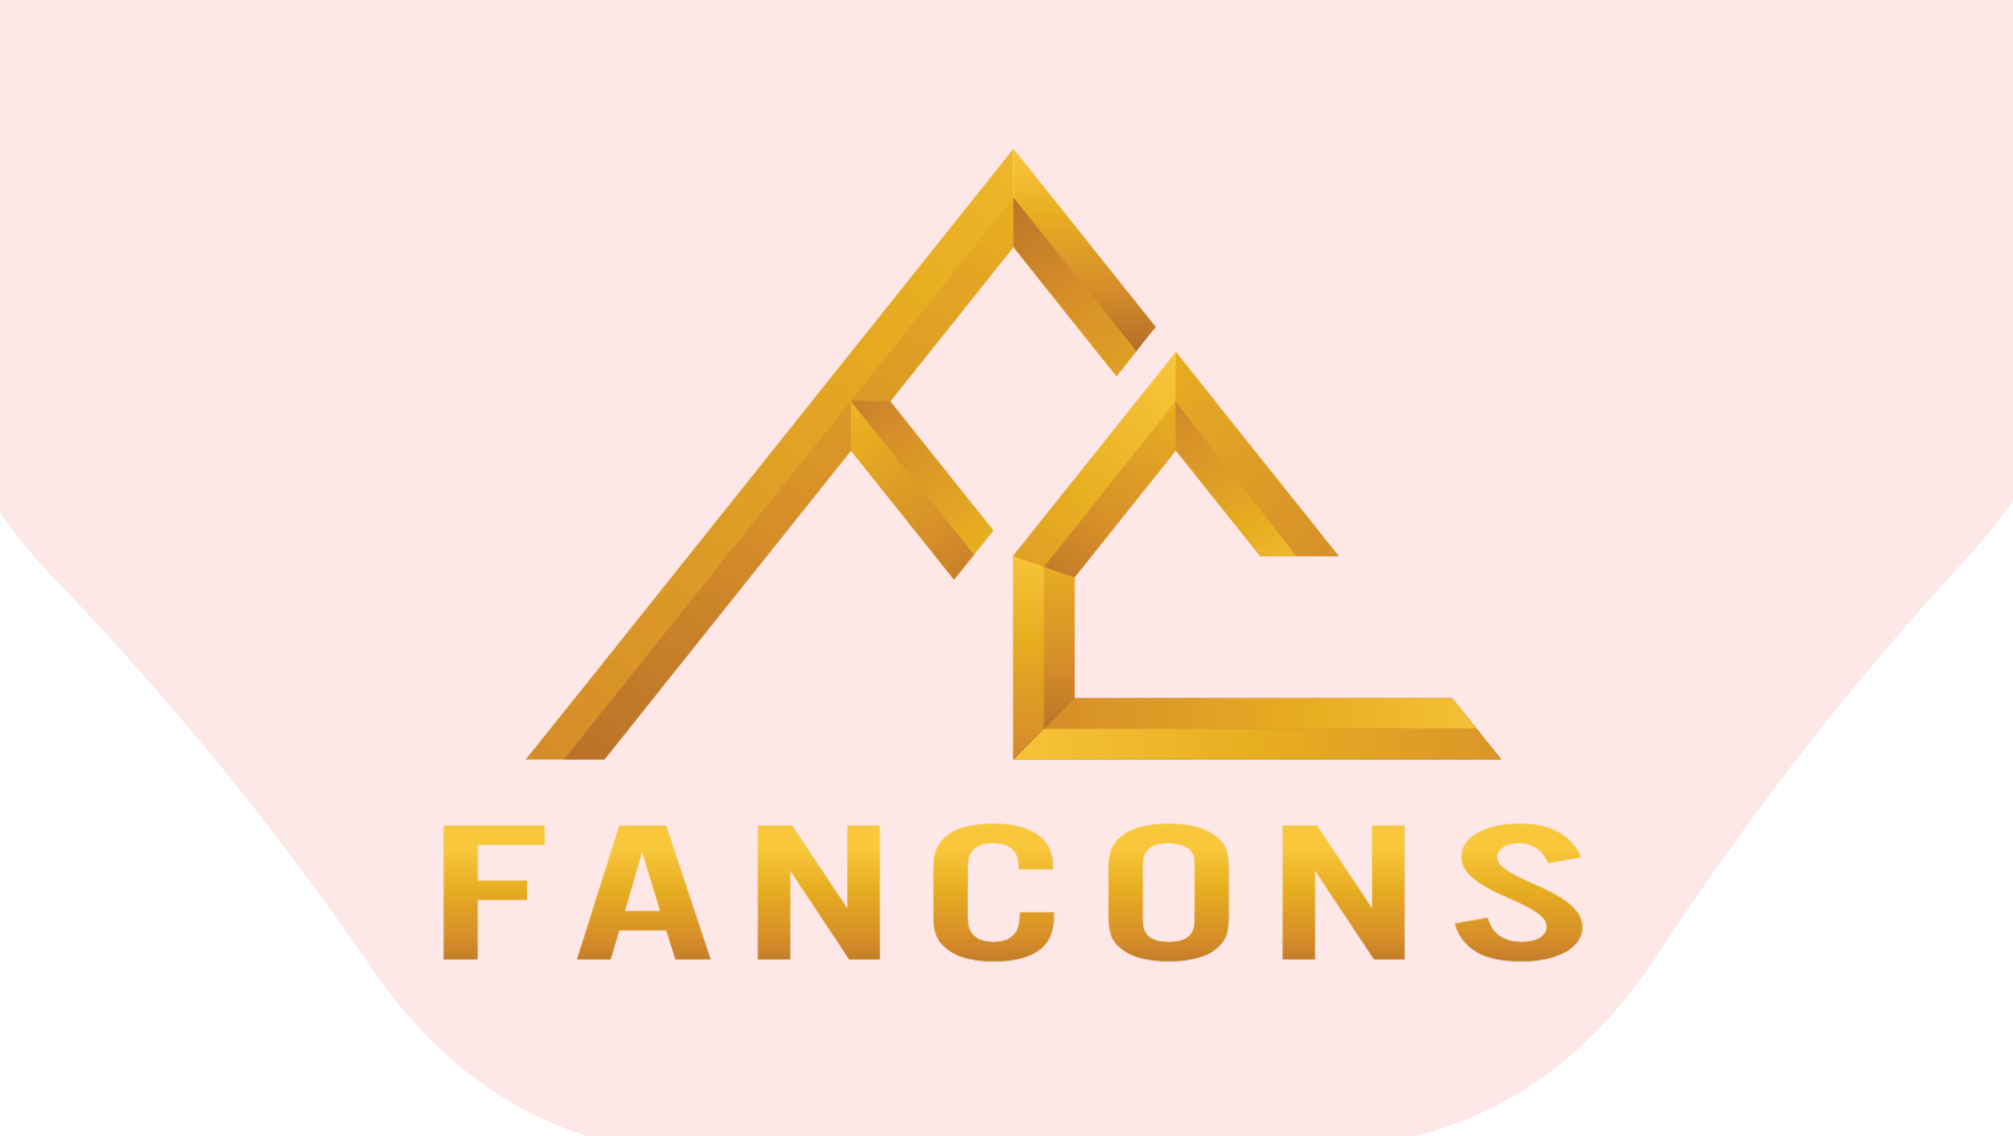 Fancons